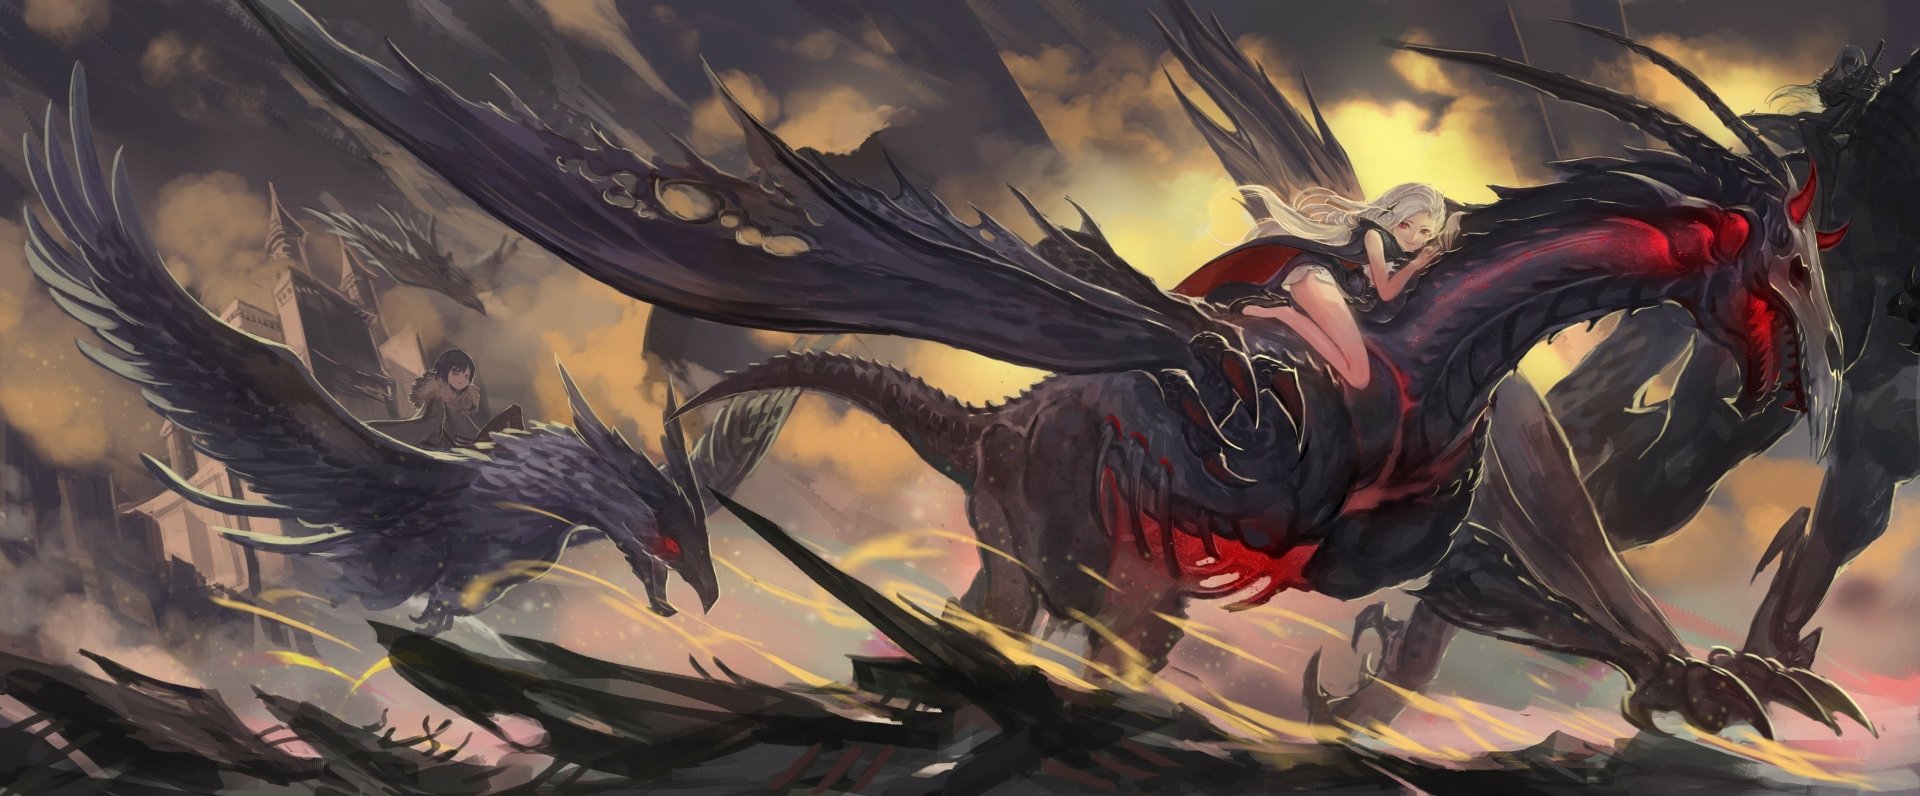 HD desktop wallpaper featuring a dramatic scene from Pixiv Fantasia Fallen Kings, depicting a warrior riding a majestic black dragon in a dynamic battle setting.